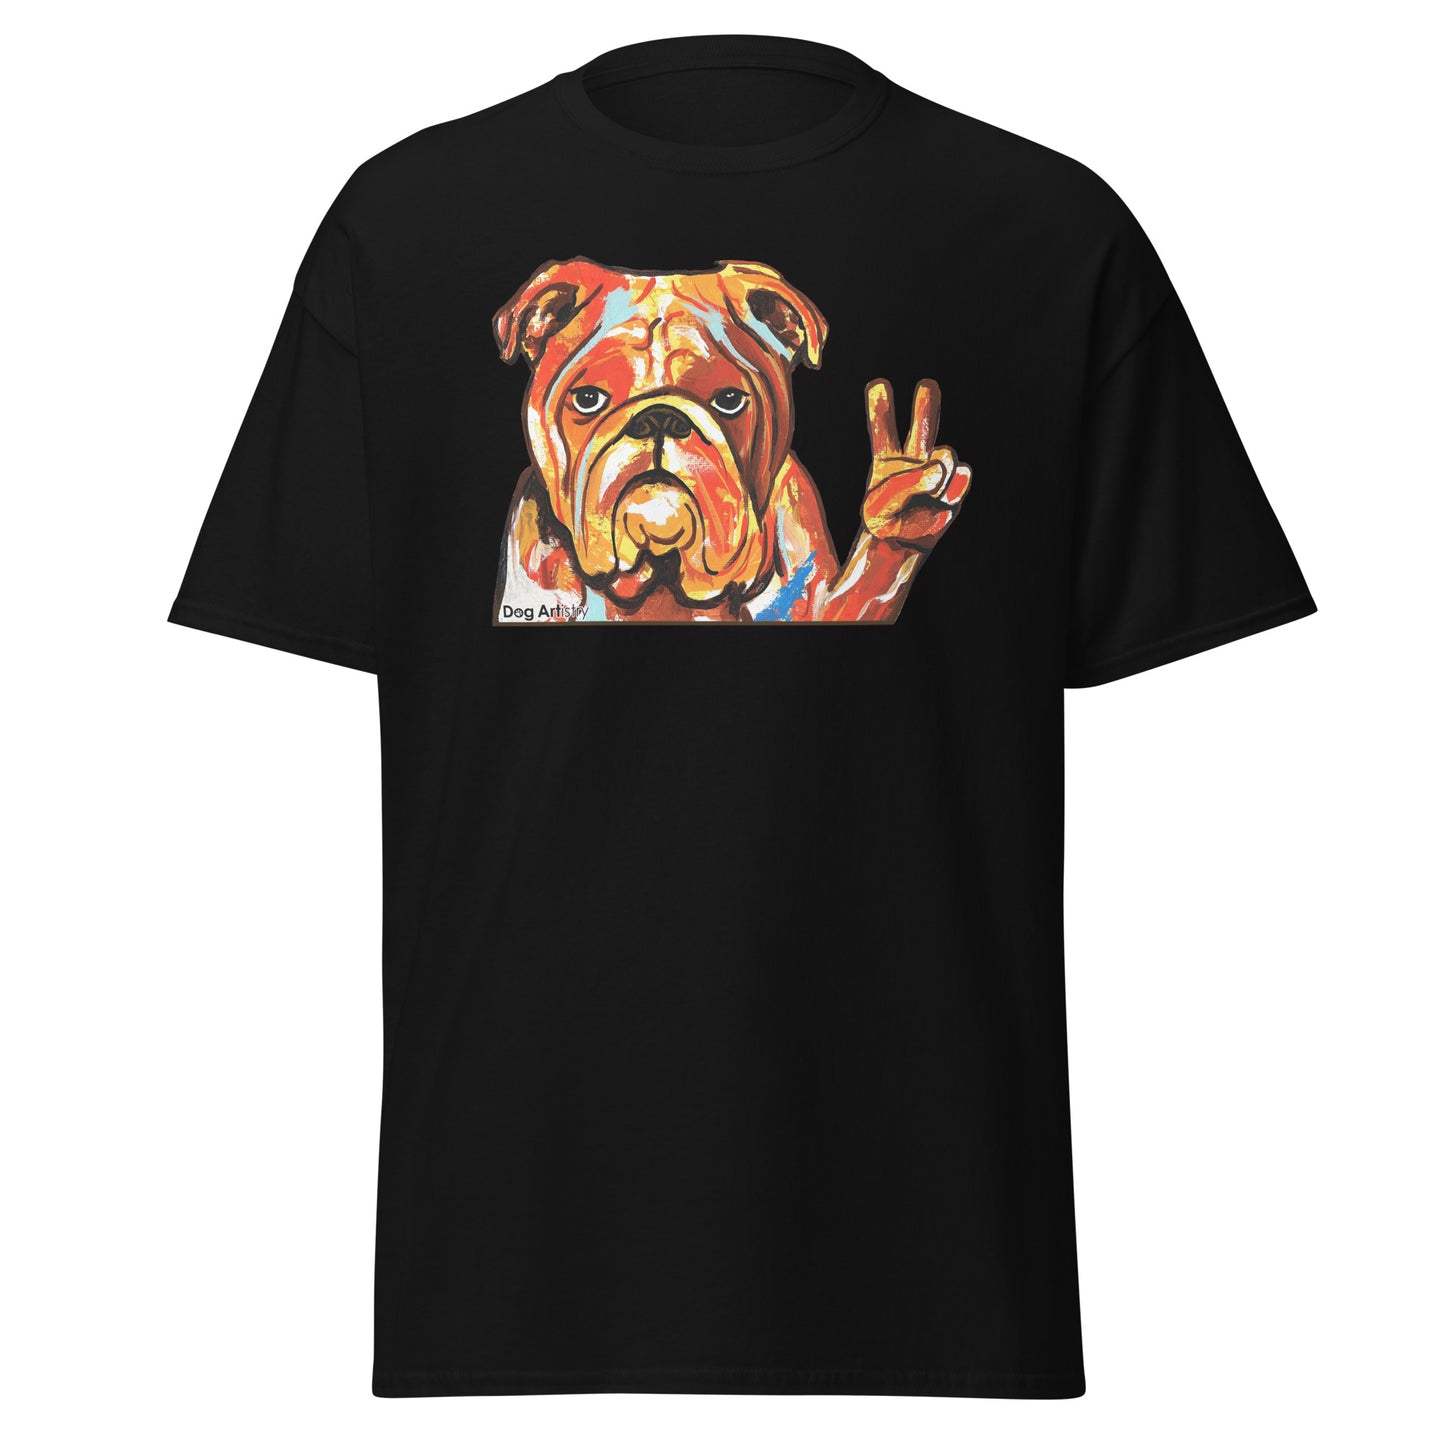 English Bulldog doing the peace sign men's t-shirt black by Dog Artistry